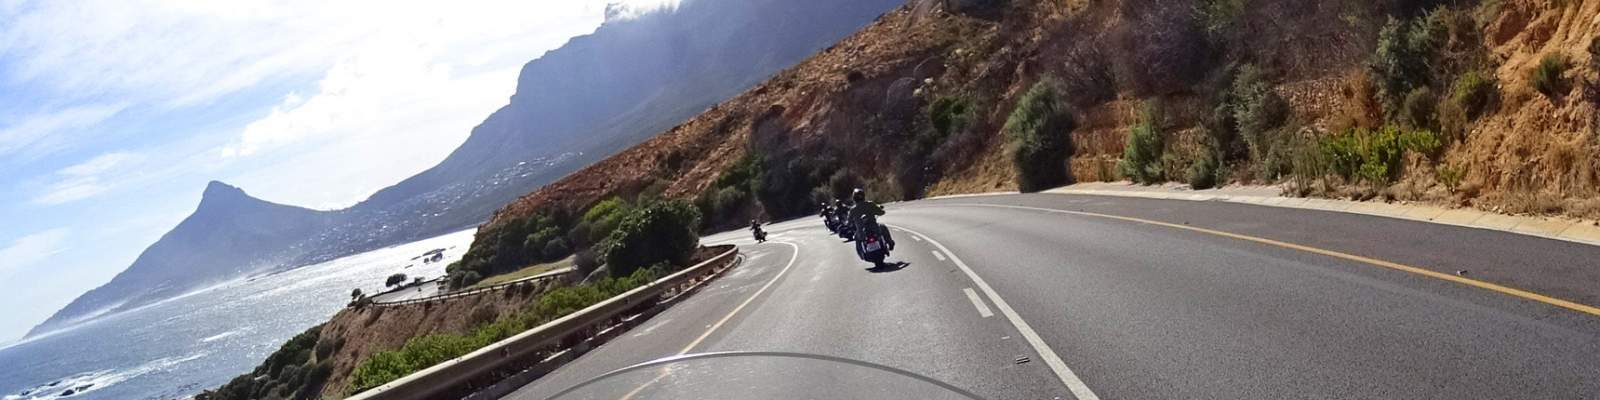 Südafrika mit dem Motorrad entdecken